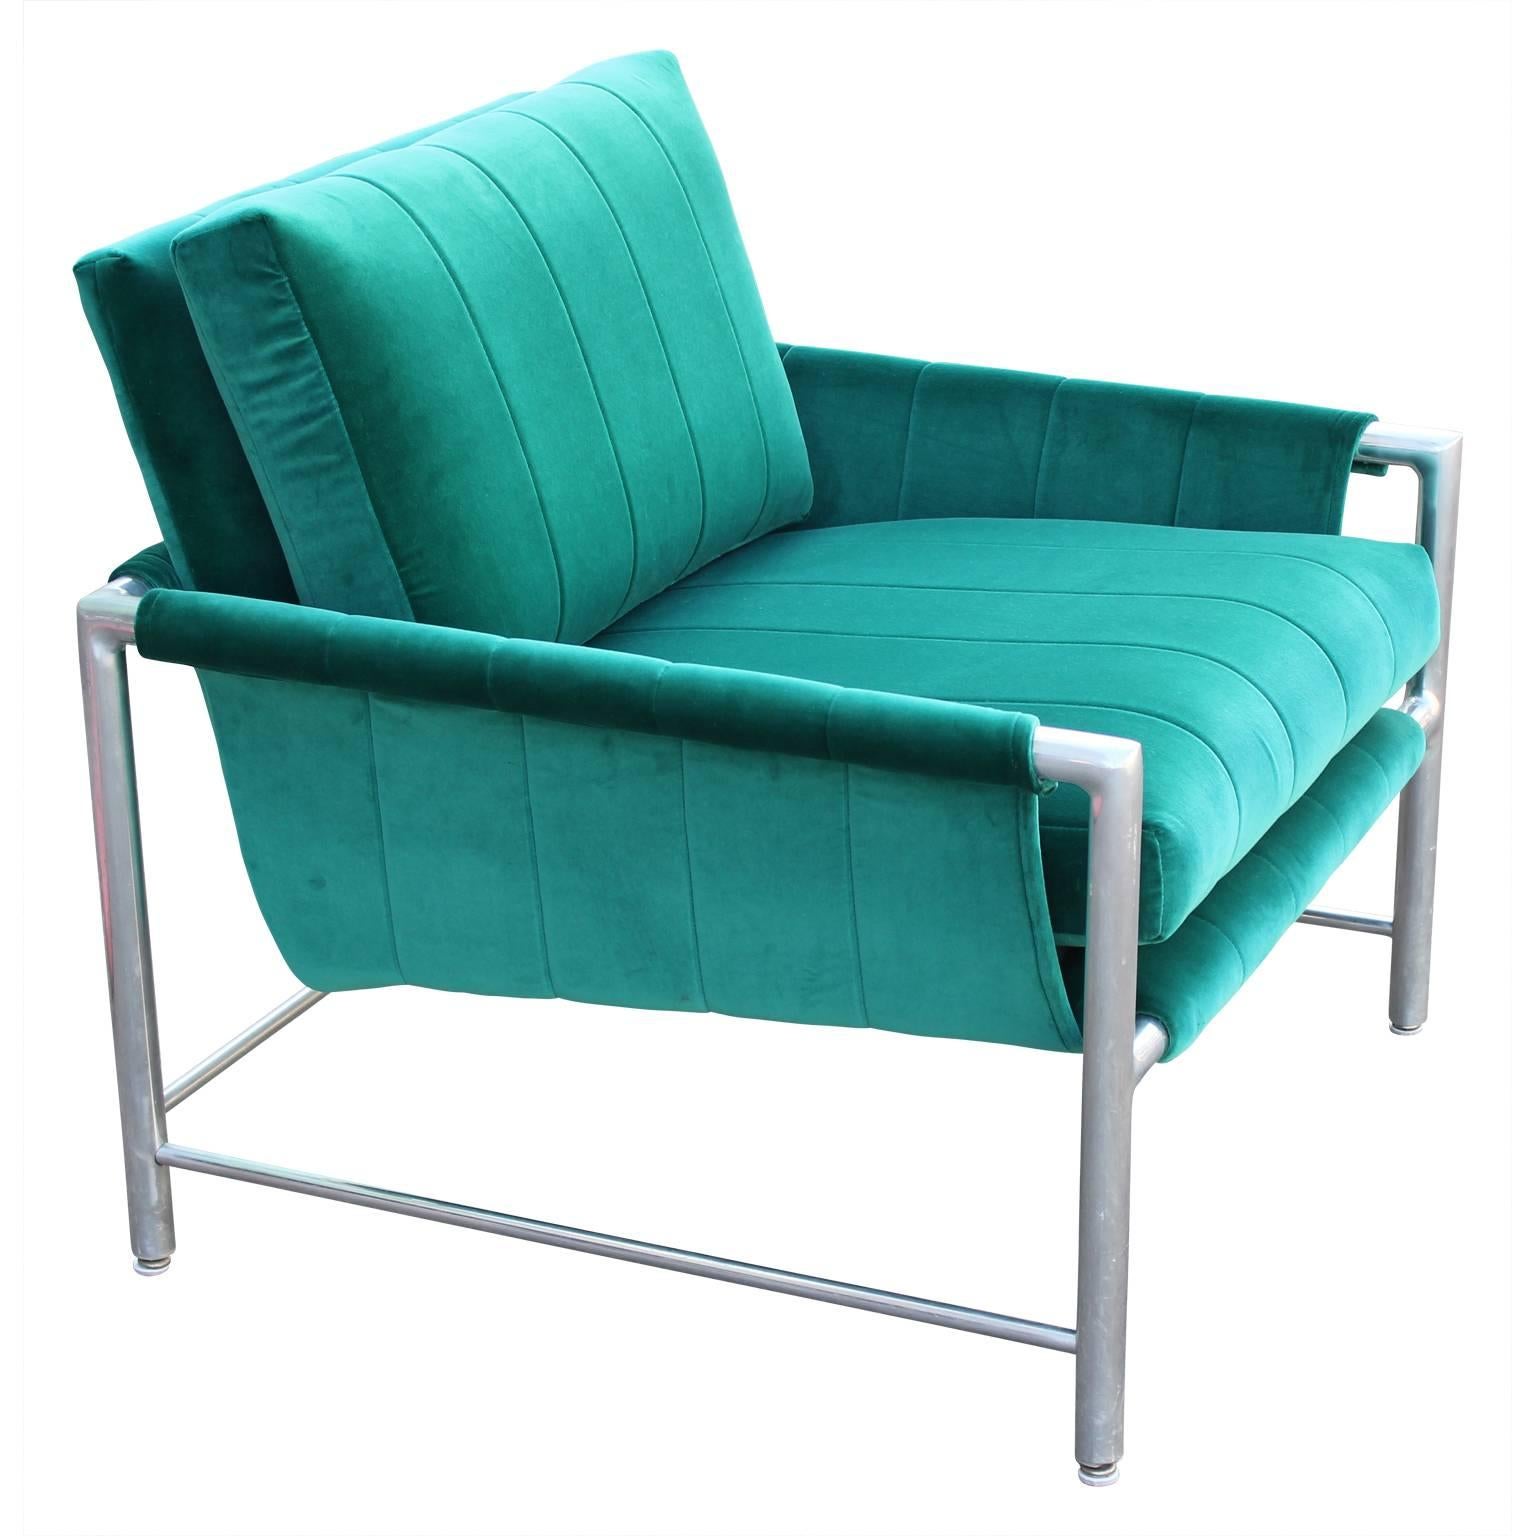 Mid-20th Century Modern Milo Baughman Style Aluminum Turquoise Teal Velvet Lounge Chair